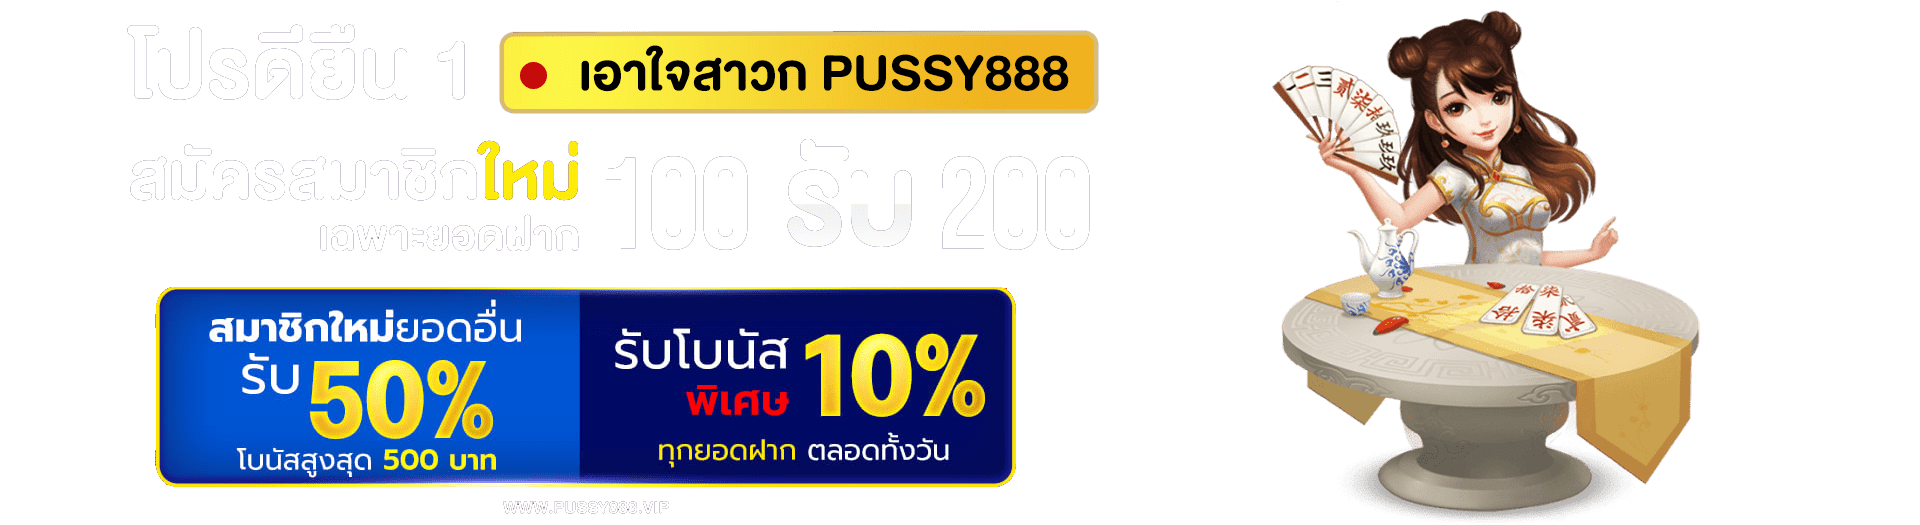 pussy888 10 รับ 100